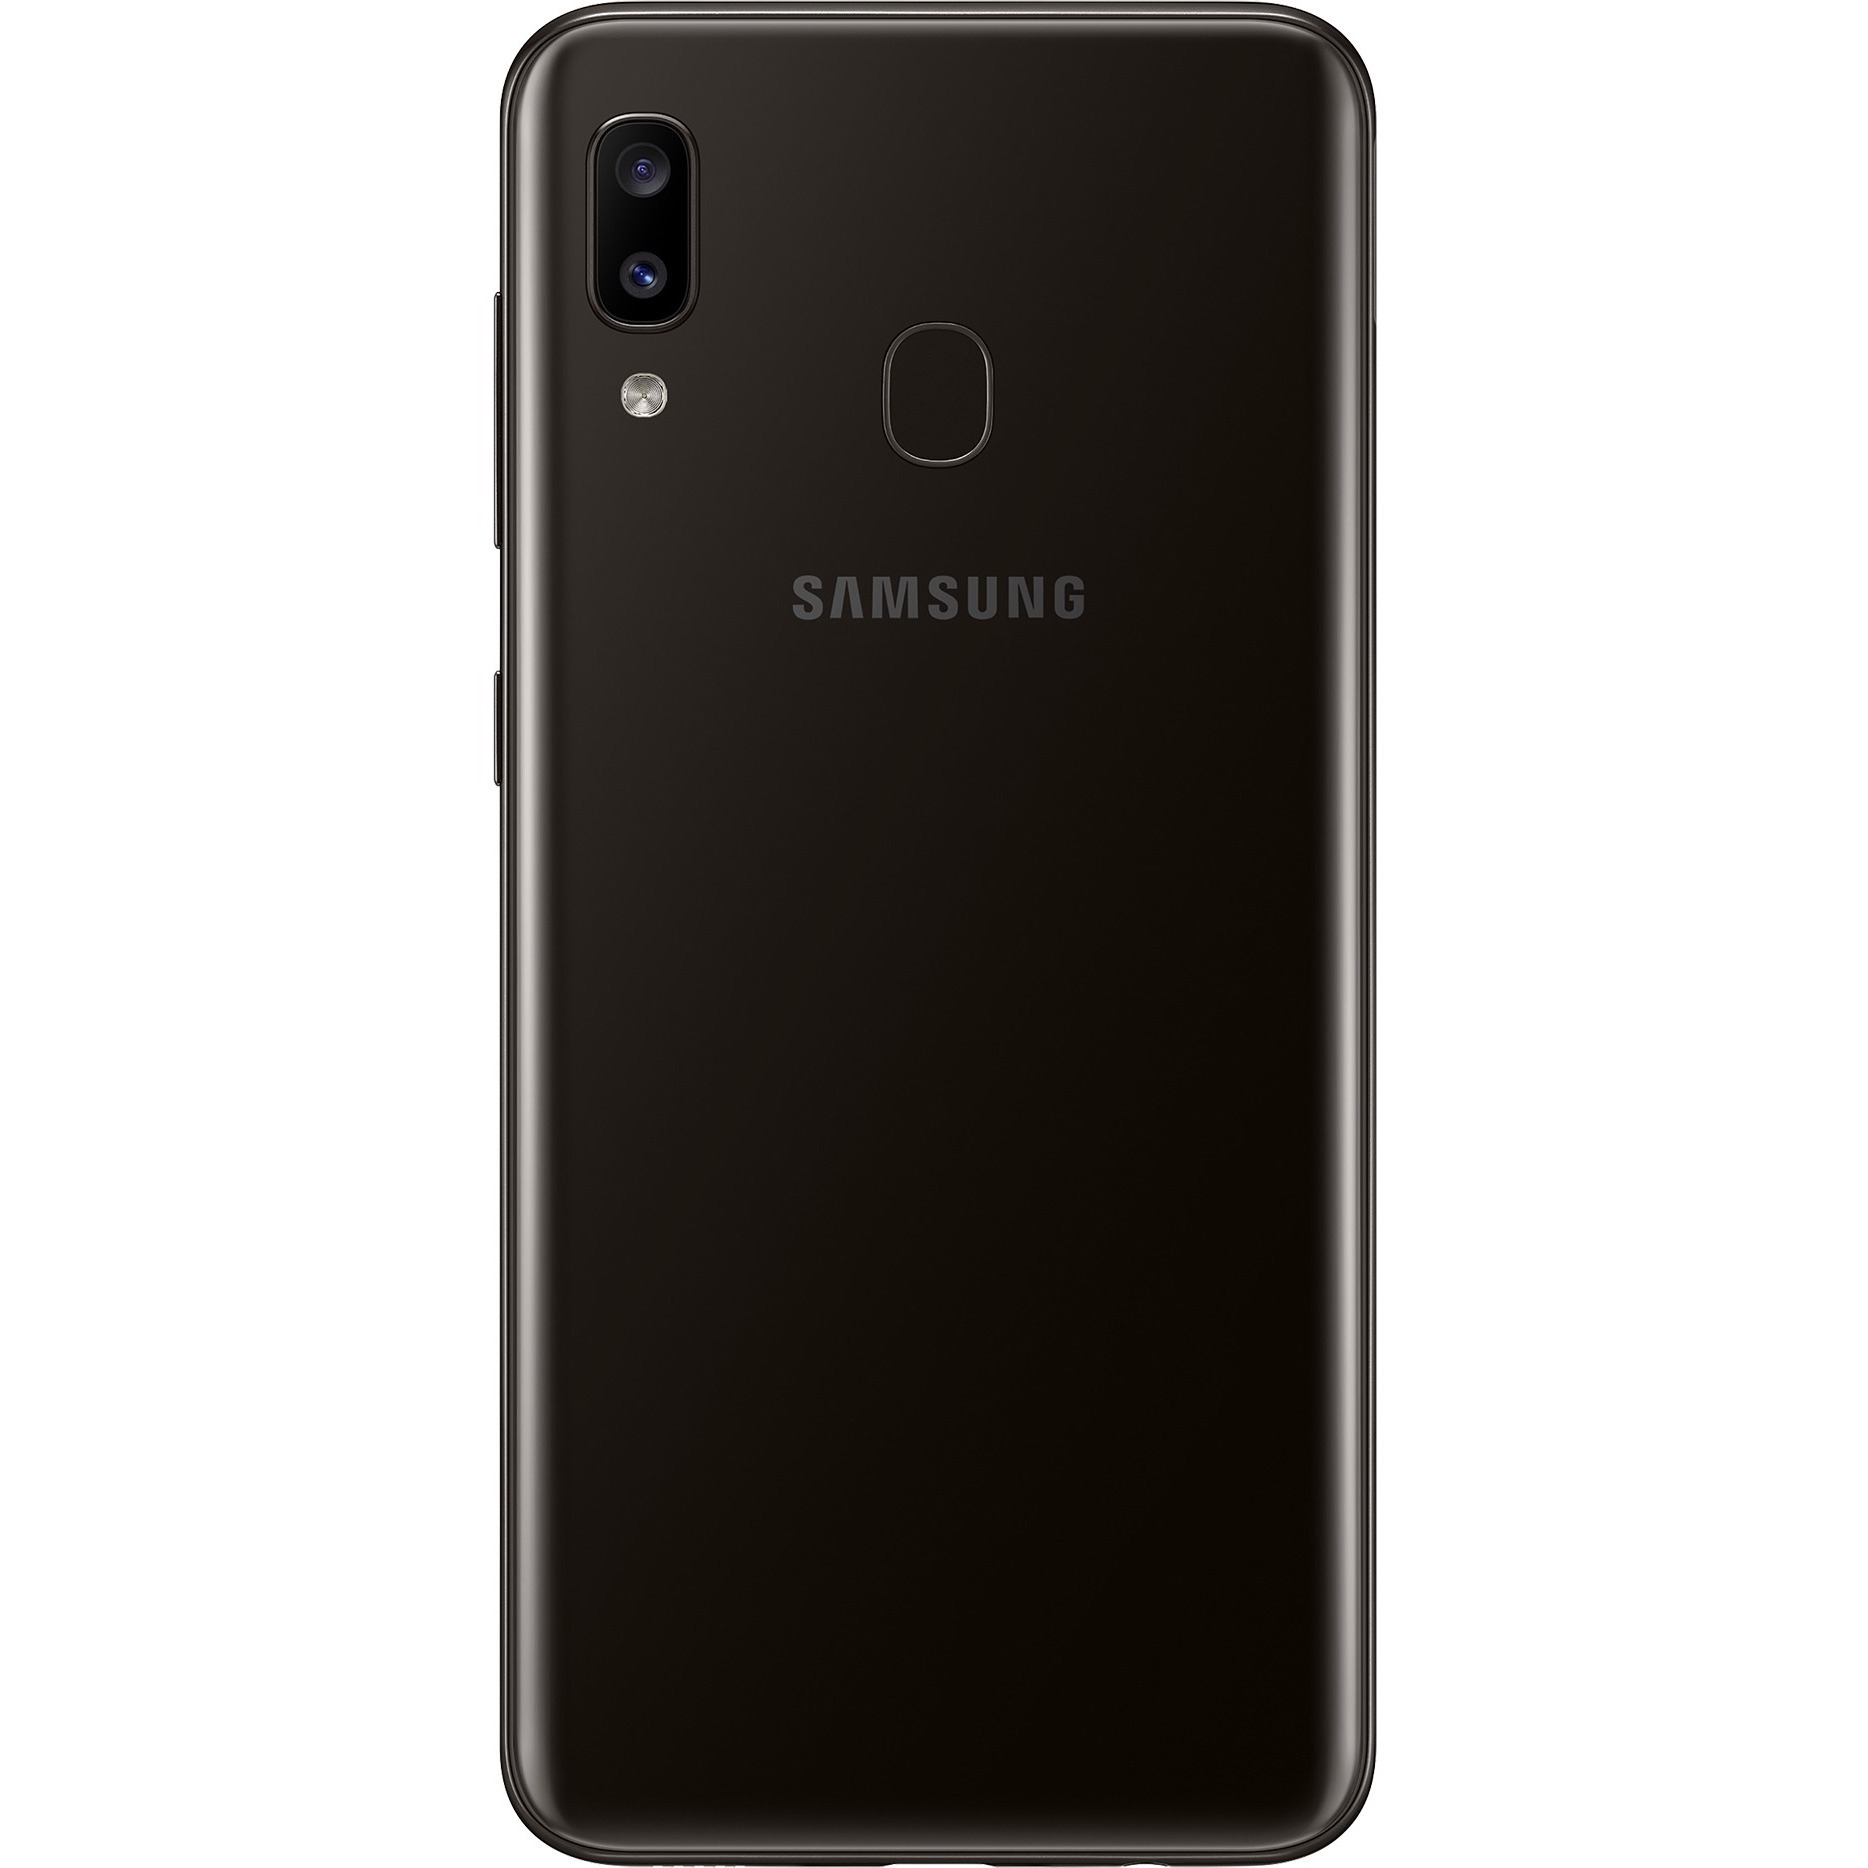 SAMSUNG Unlocked Galaxy A20, 32GB Black - Smartphone - image 4 of 15